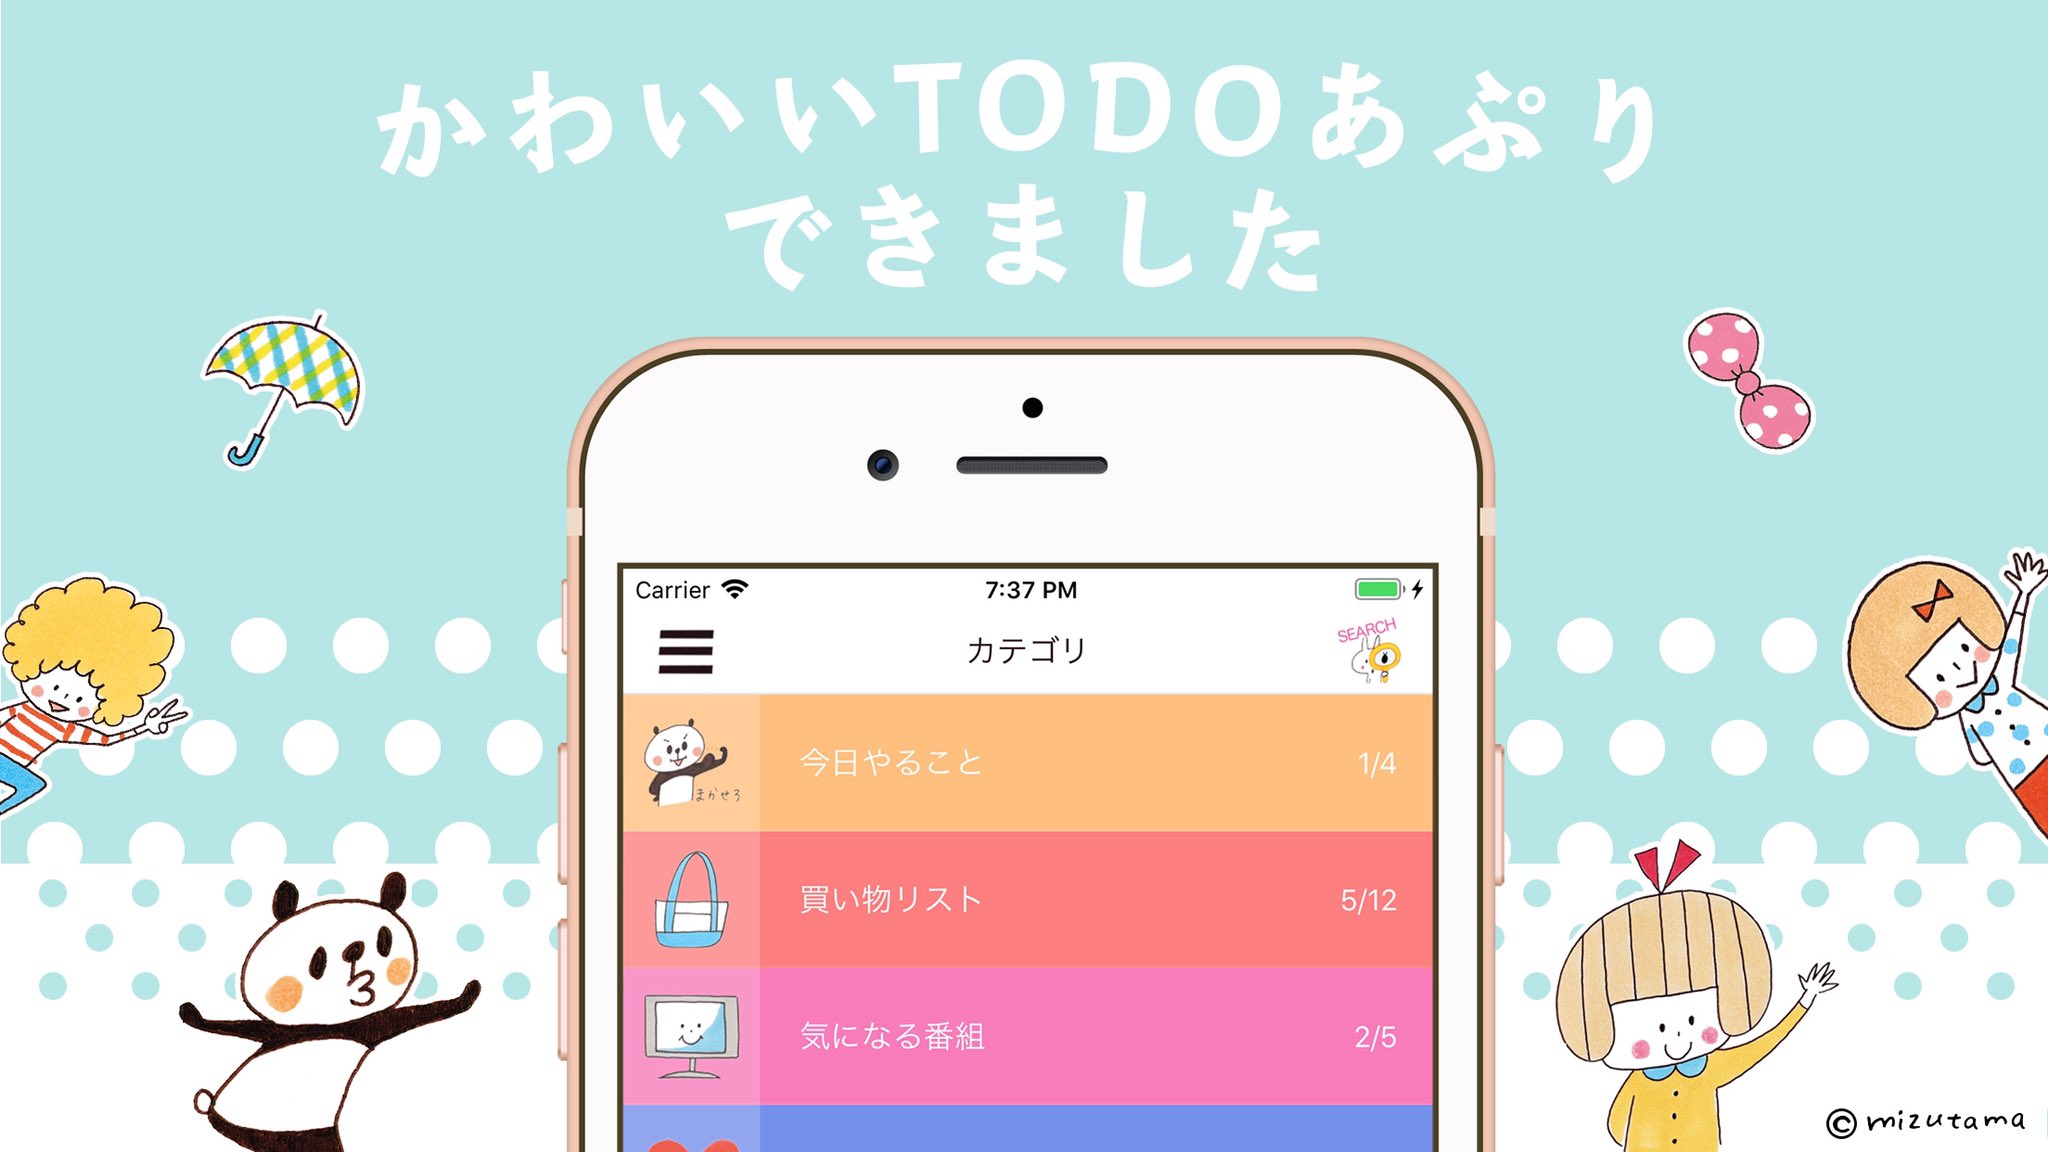 Mizutama Newアプリのお知らせ アプリ Mizutamatodo が リリースになりました Todo 管理が可愛くできるアプリ Ios T Co 7pkfgtvkya なんと無料なんですー わたしも今 ダウンロードしました かわいいアプリだよー イラスト